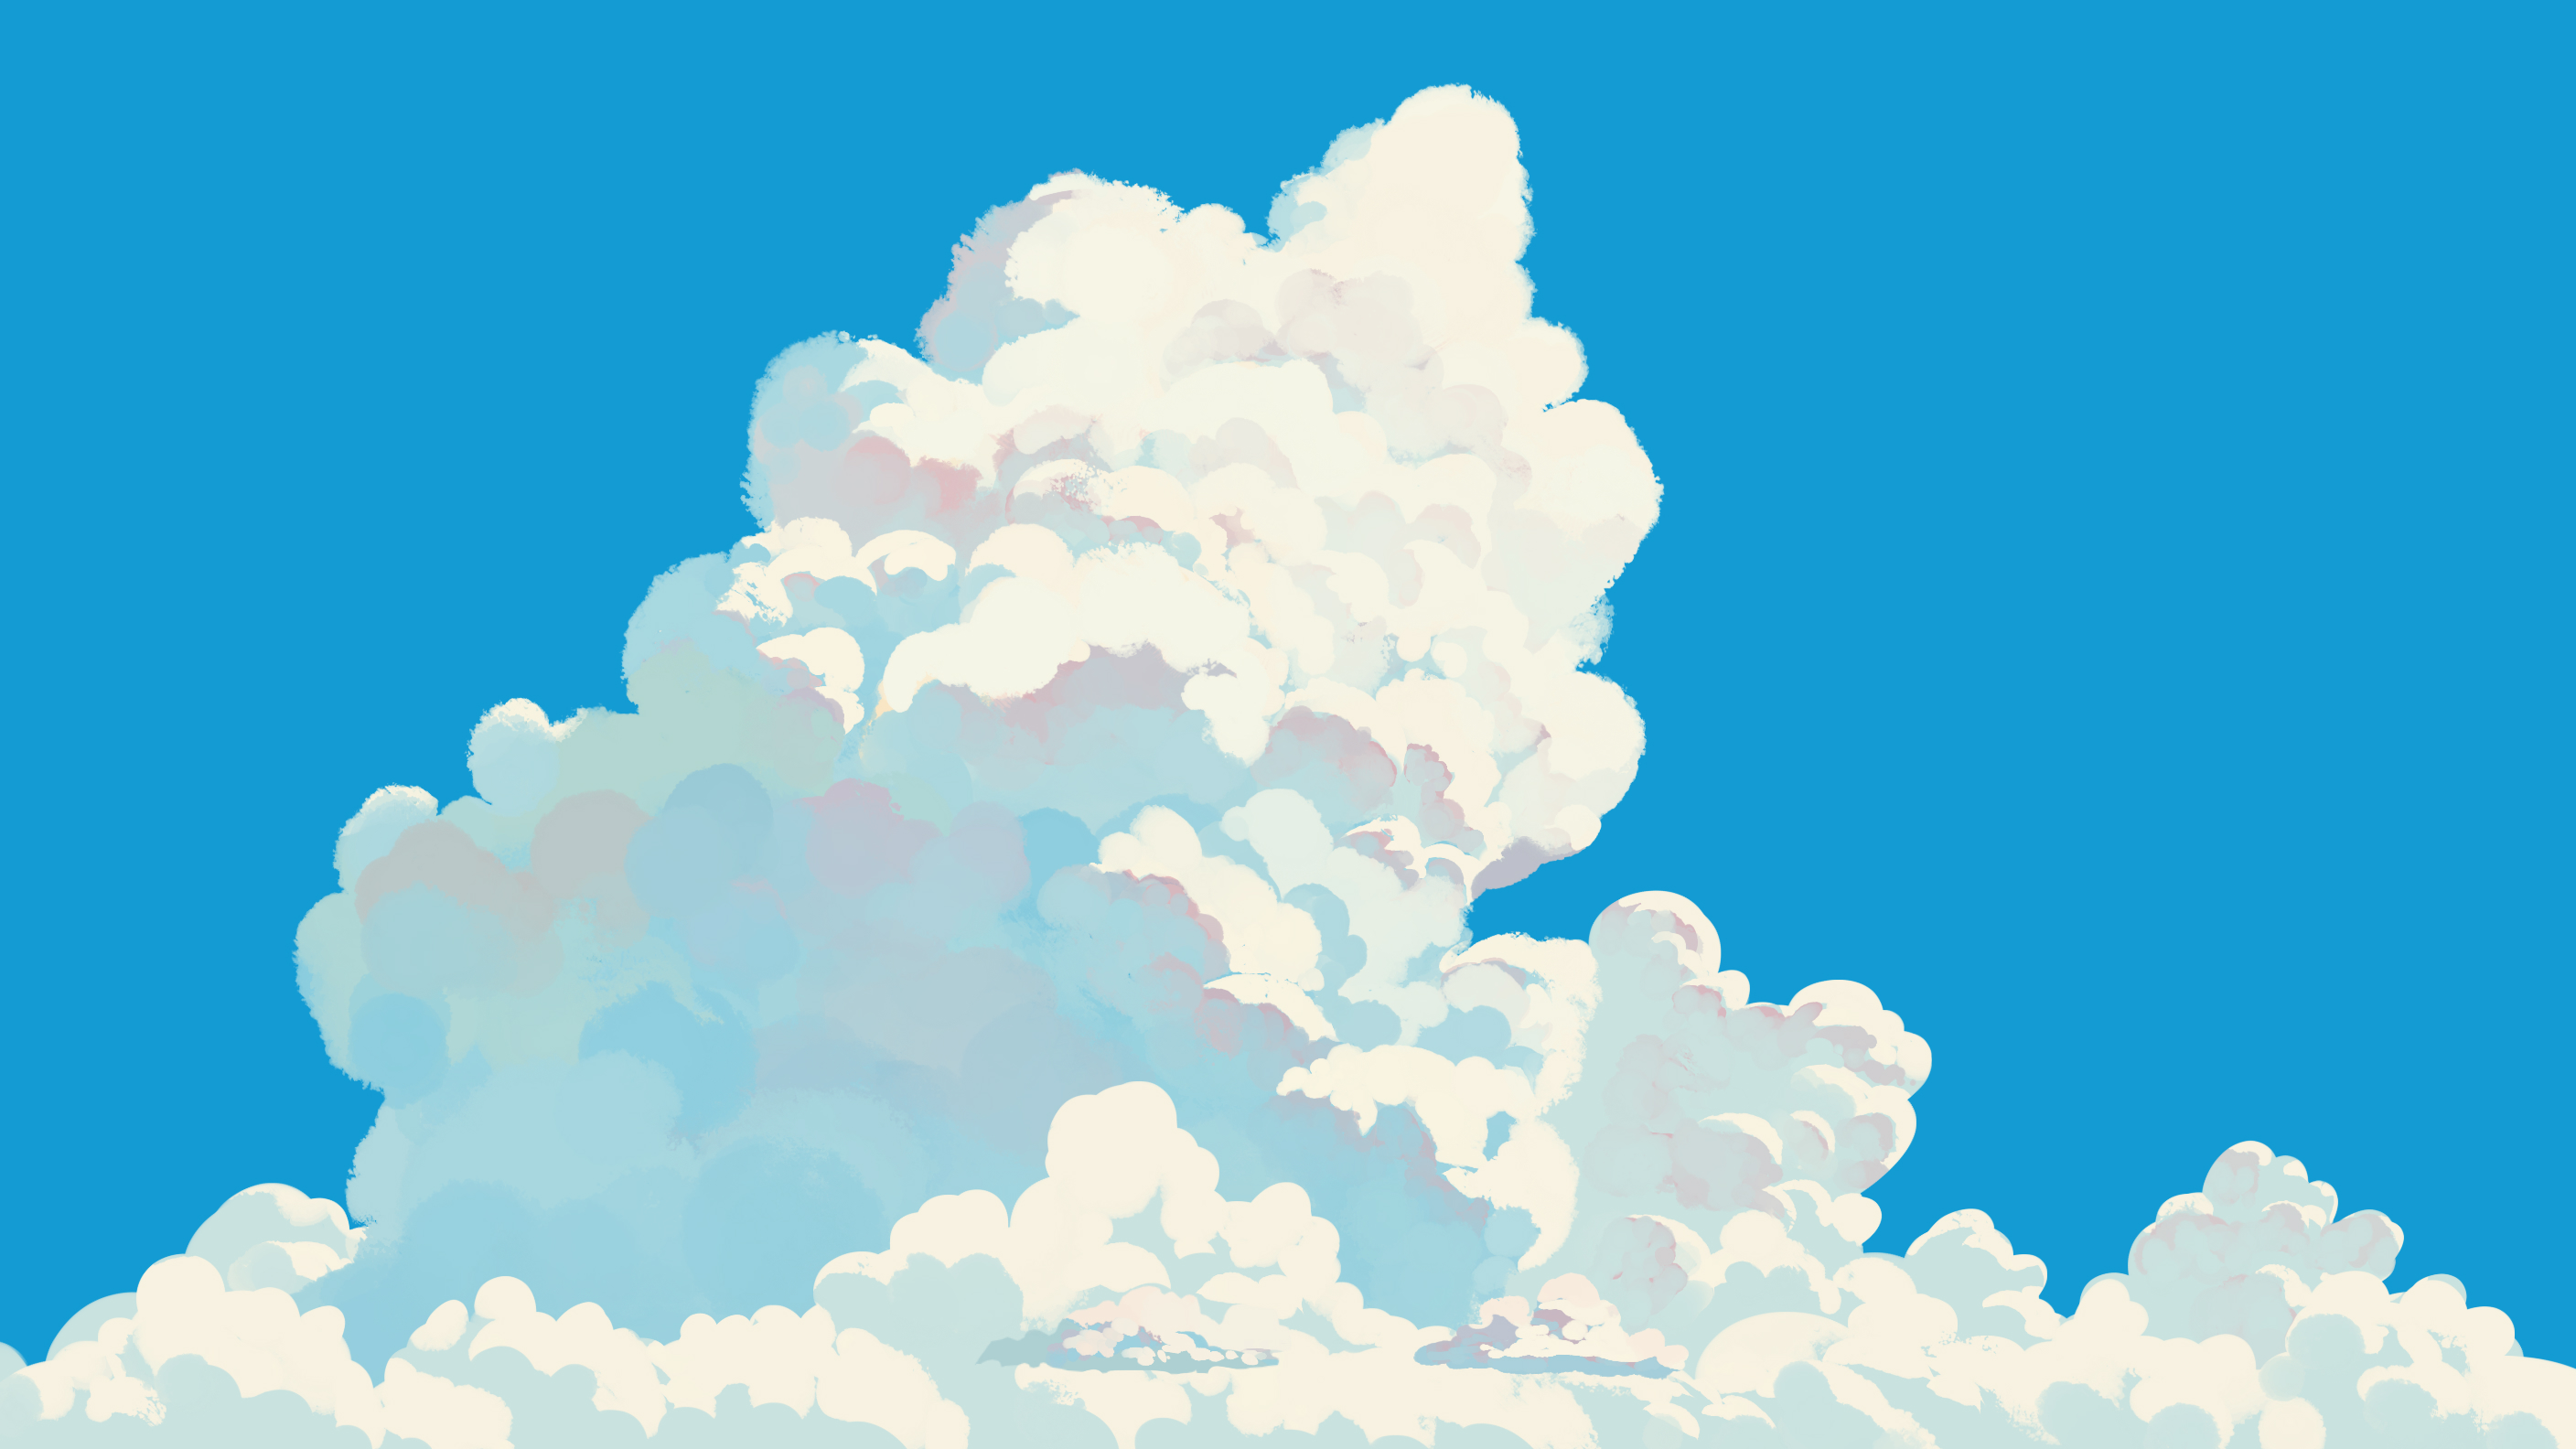 General 2816x1584 digital art artwork illustration minimalism clouds nature sky